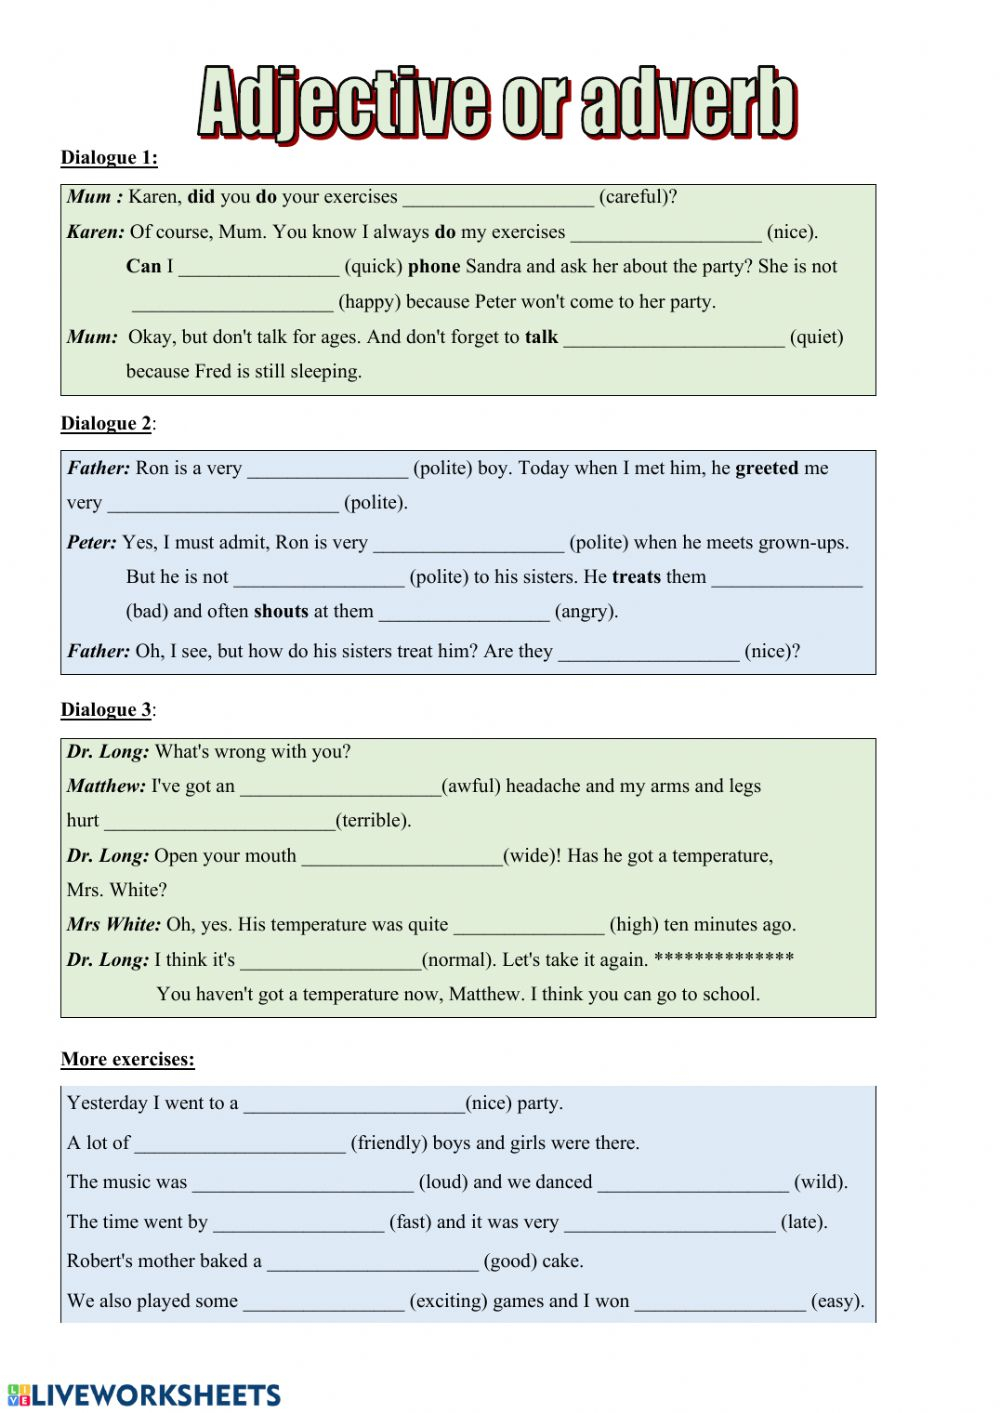 adjective-and-adverb-worksheets-2nd-grade-adverbworksheets